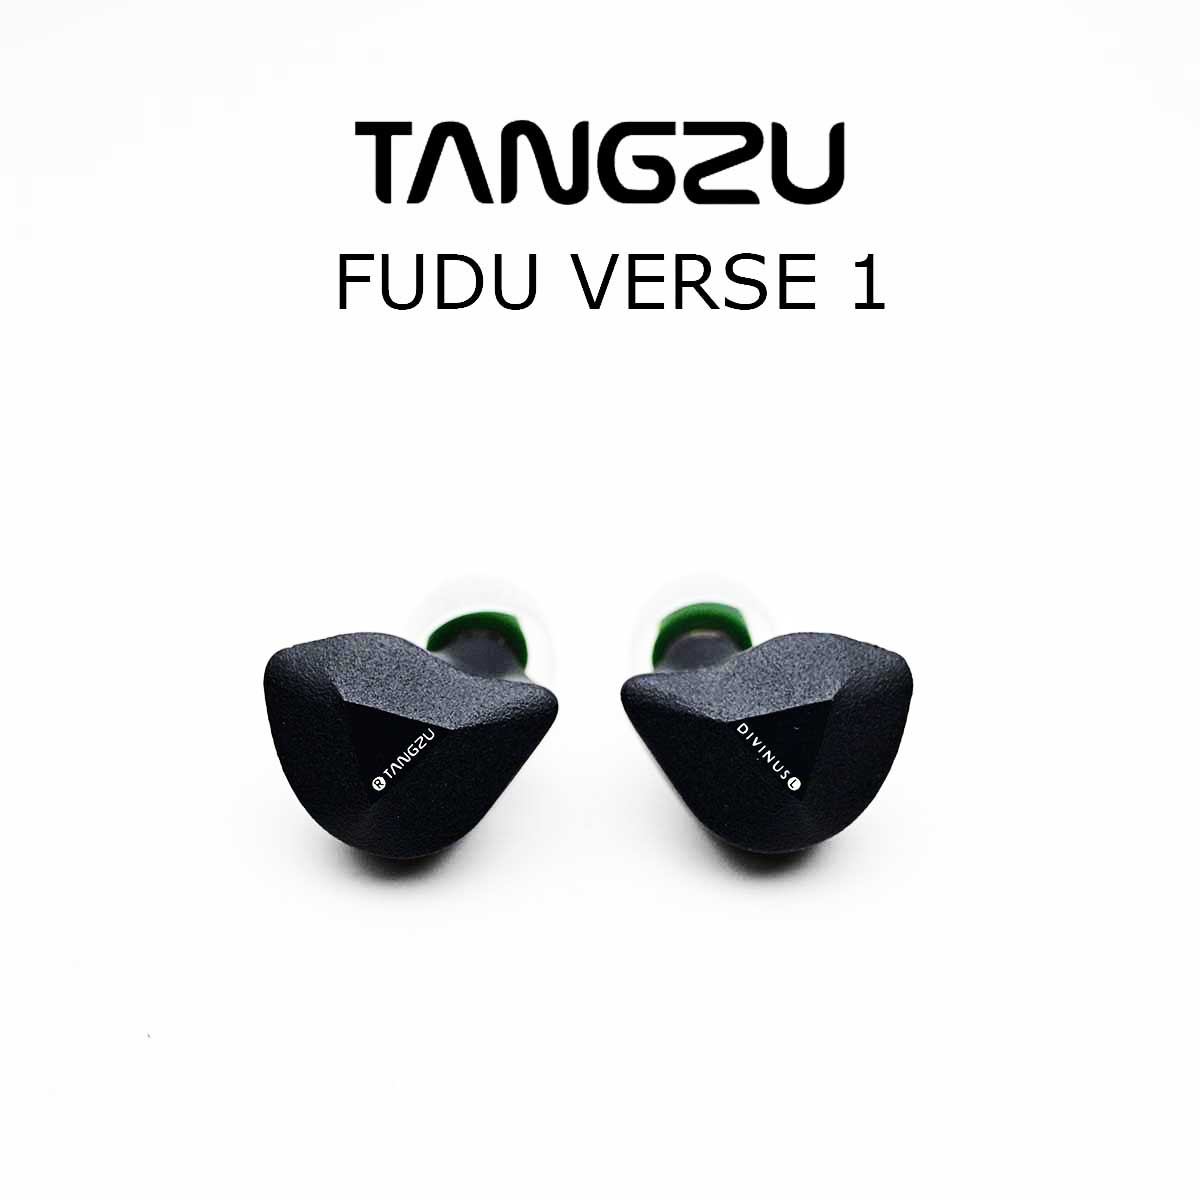 TANGZU FUDU VERSE 1 Hifi In-ear Headphones 1 Dynamic Driver + 2 Balanc